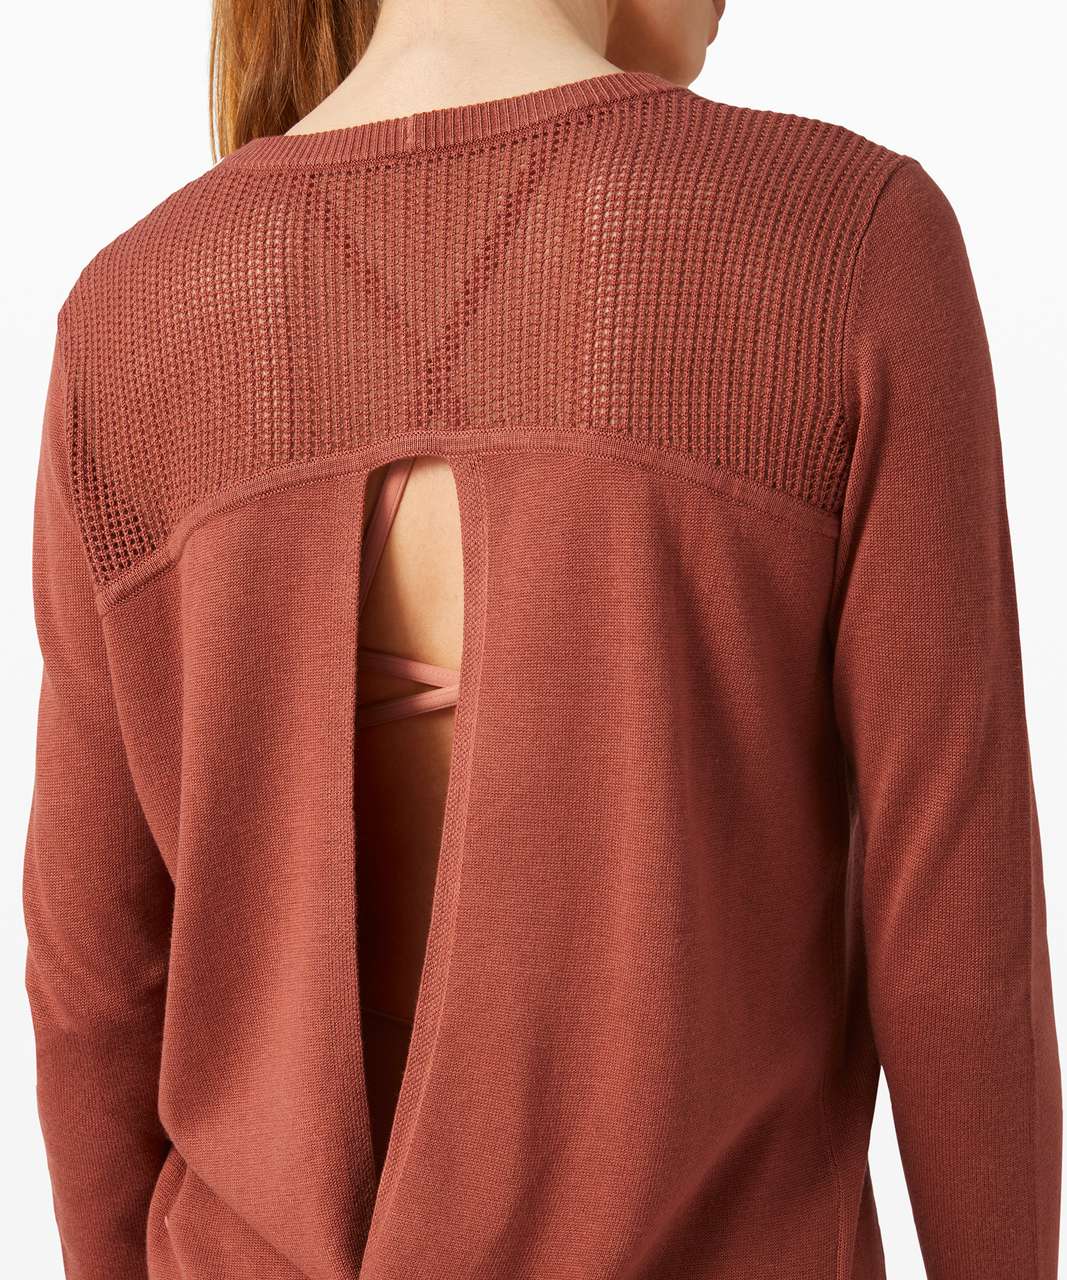 Lululemon Back to Balance Long Sleeve Sweater - Rustic Clay